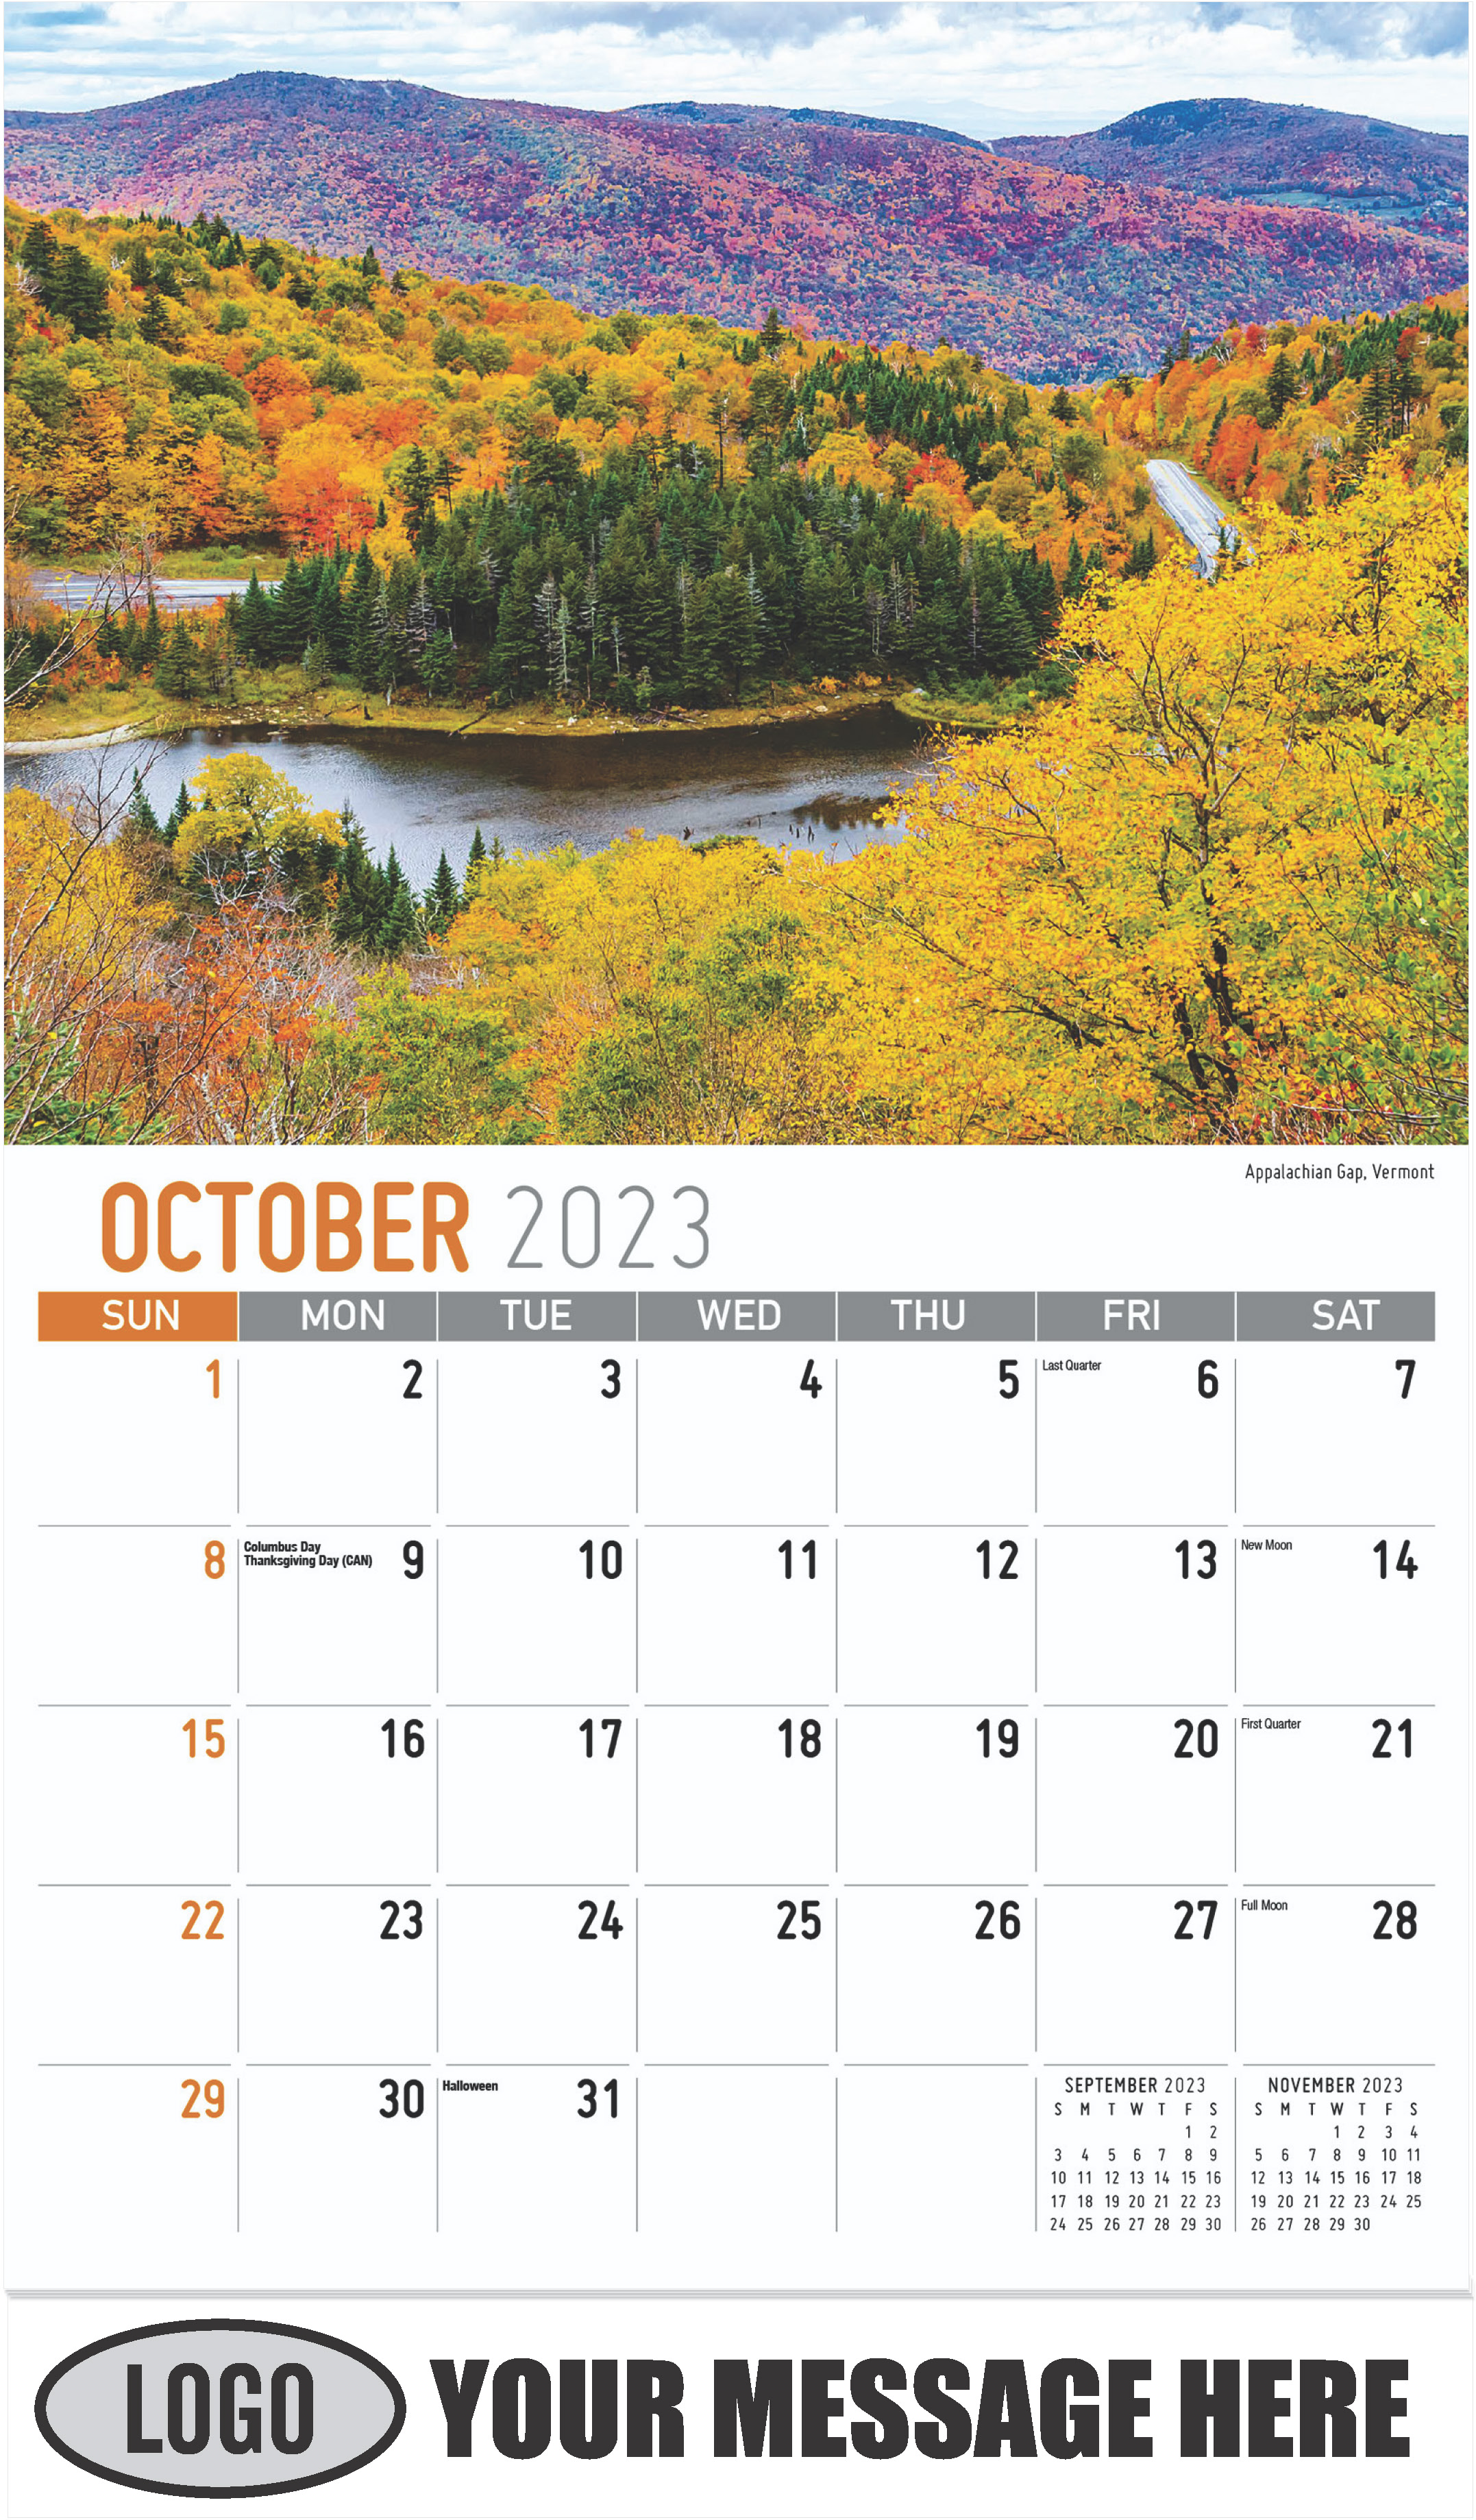 Appalachian Gap, Vermont - October - Scenes of New England 2023 Promotional Calendar